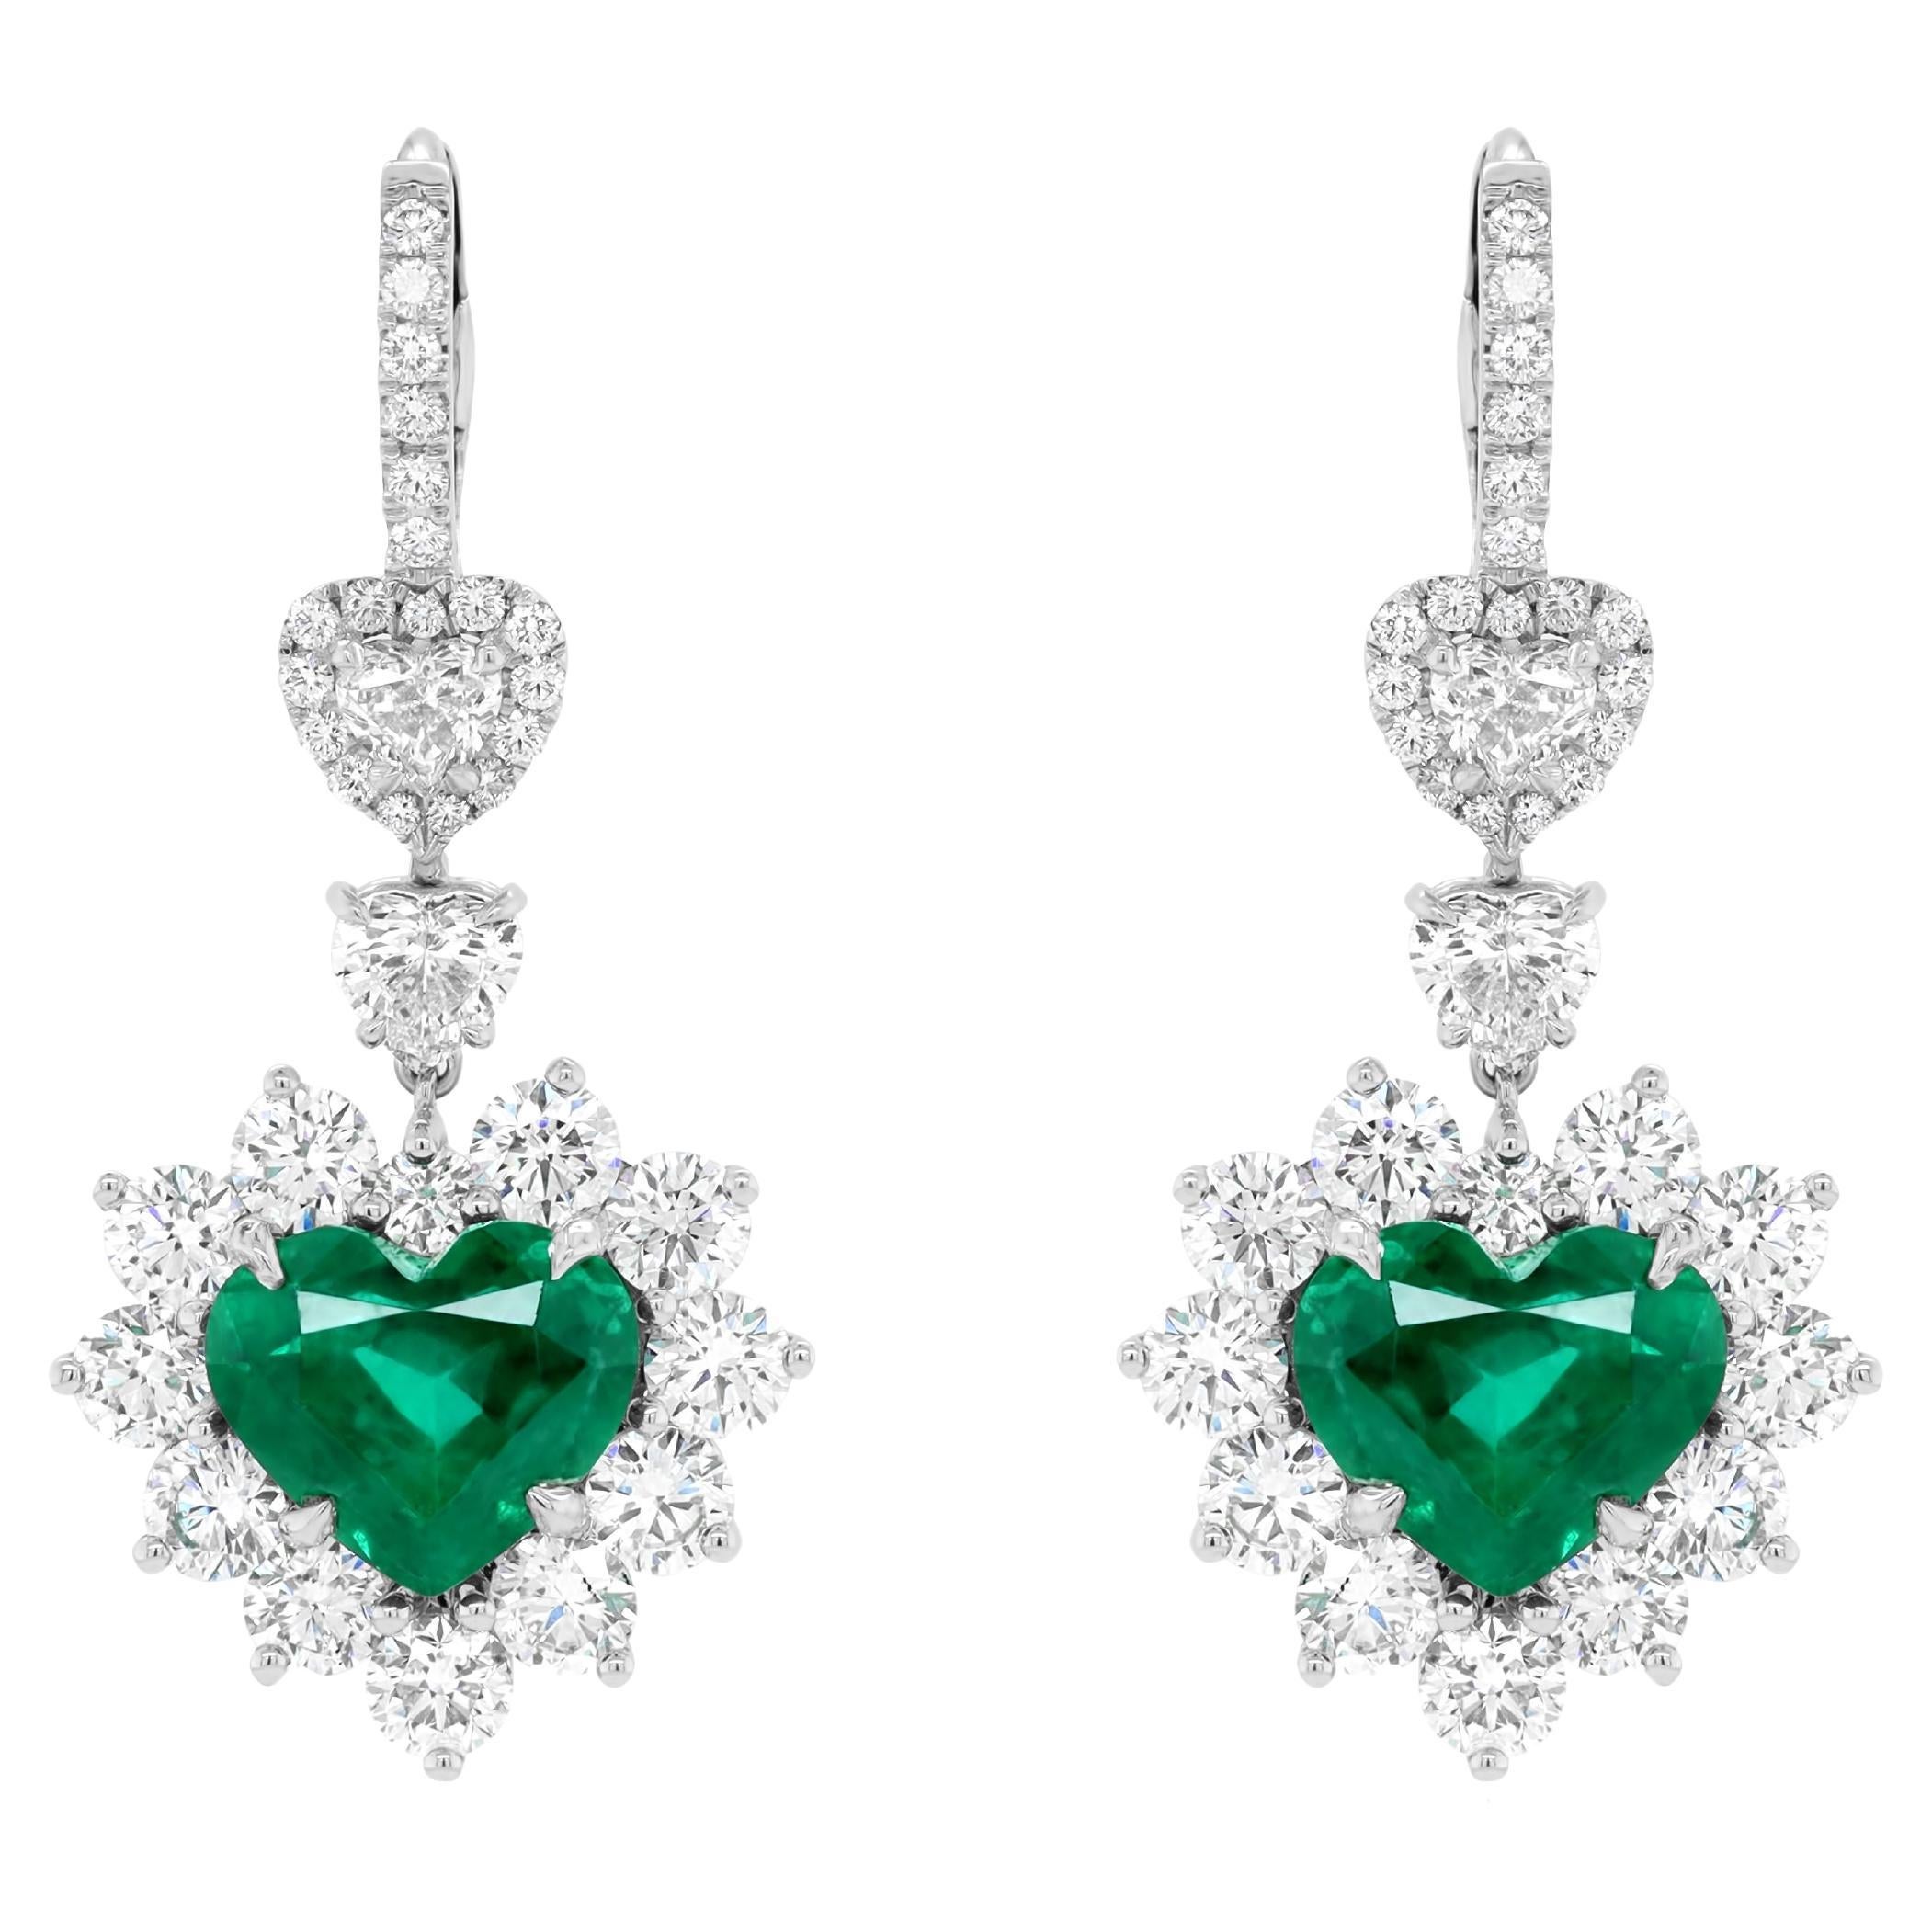 Diana M. Certified 8.16 Carat Heart Shaped Emerald Earrings